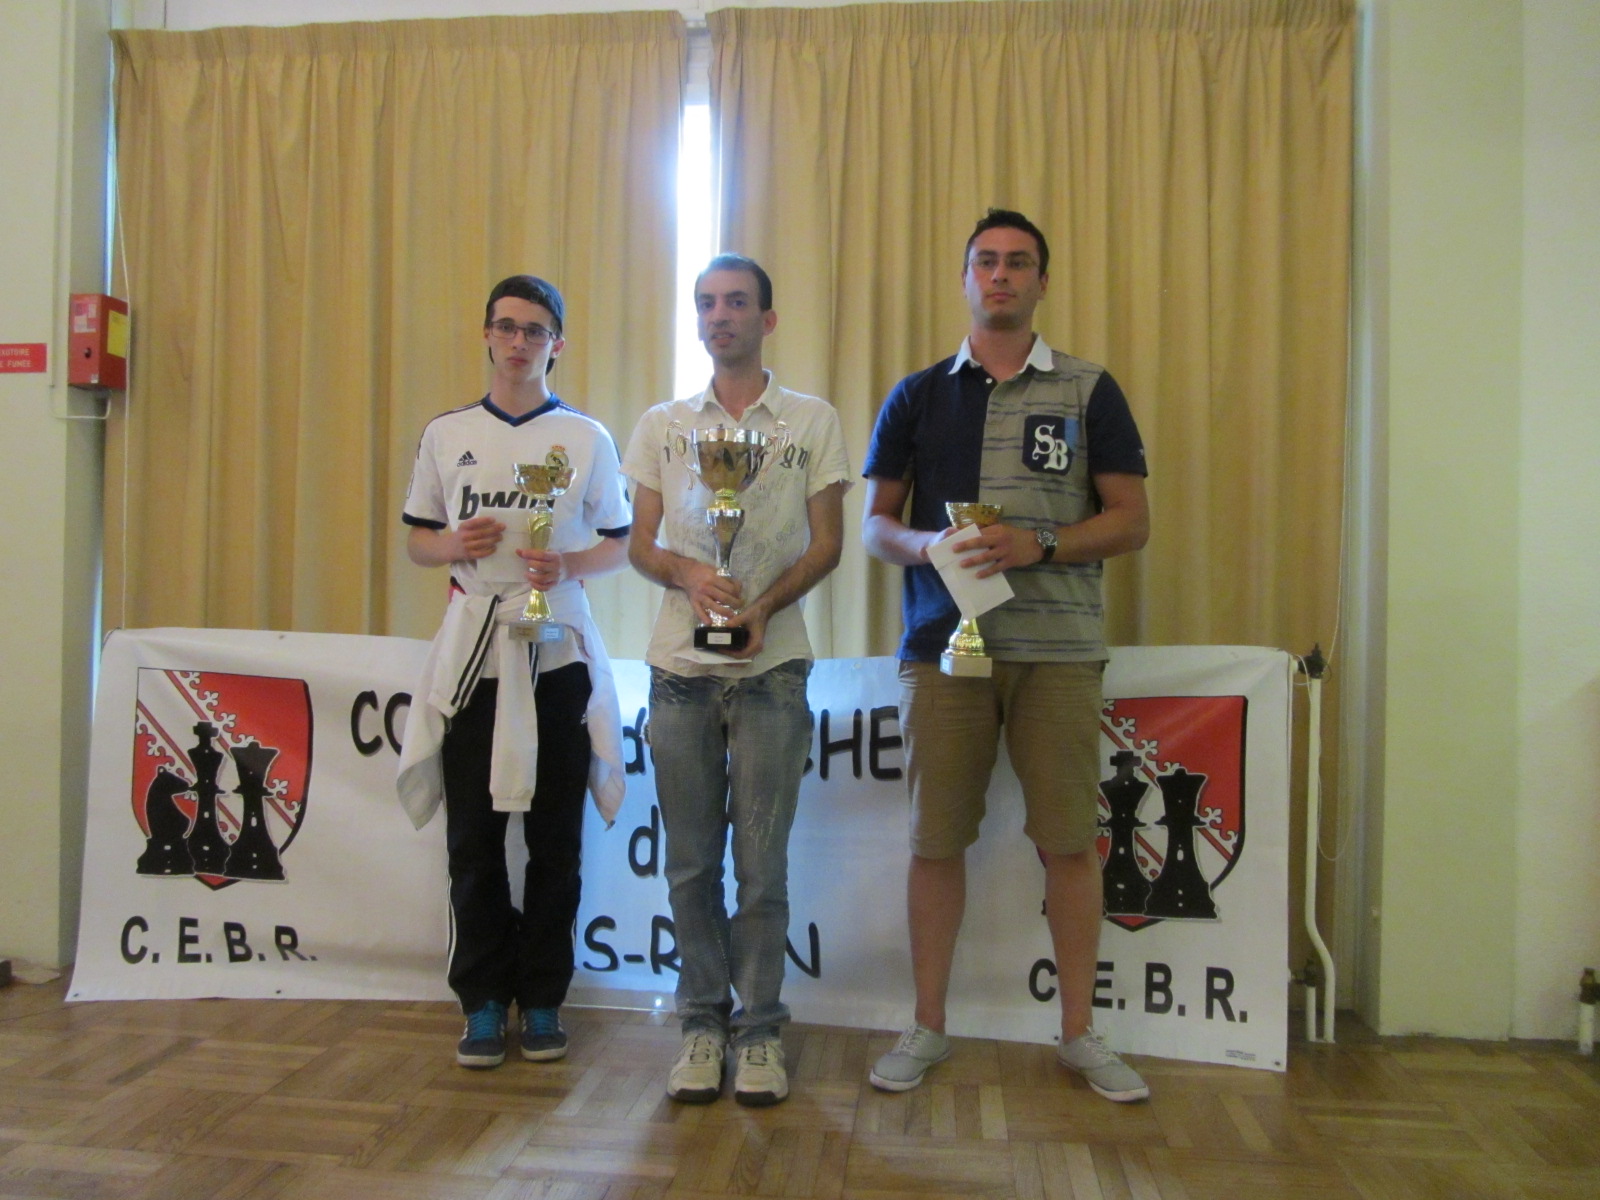 Le trio gagnant Bilel Bellahcene 3ème Patrice Lerch 1er Boris Grimberg 2ème